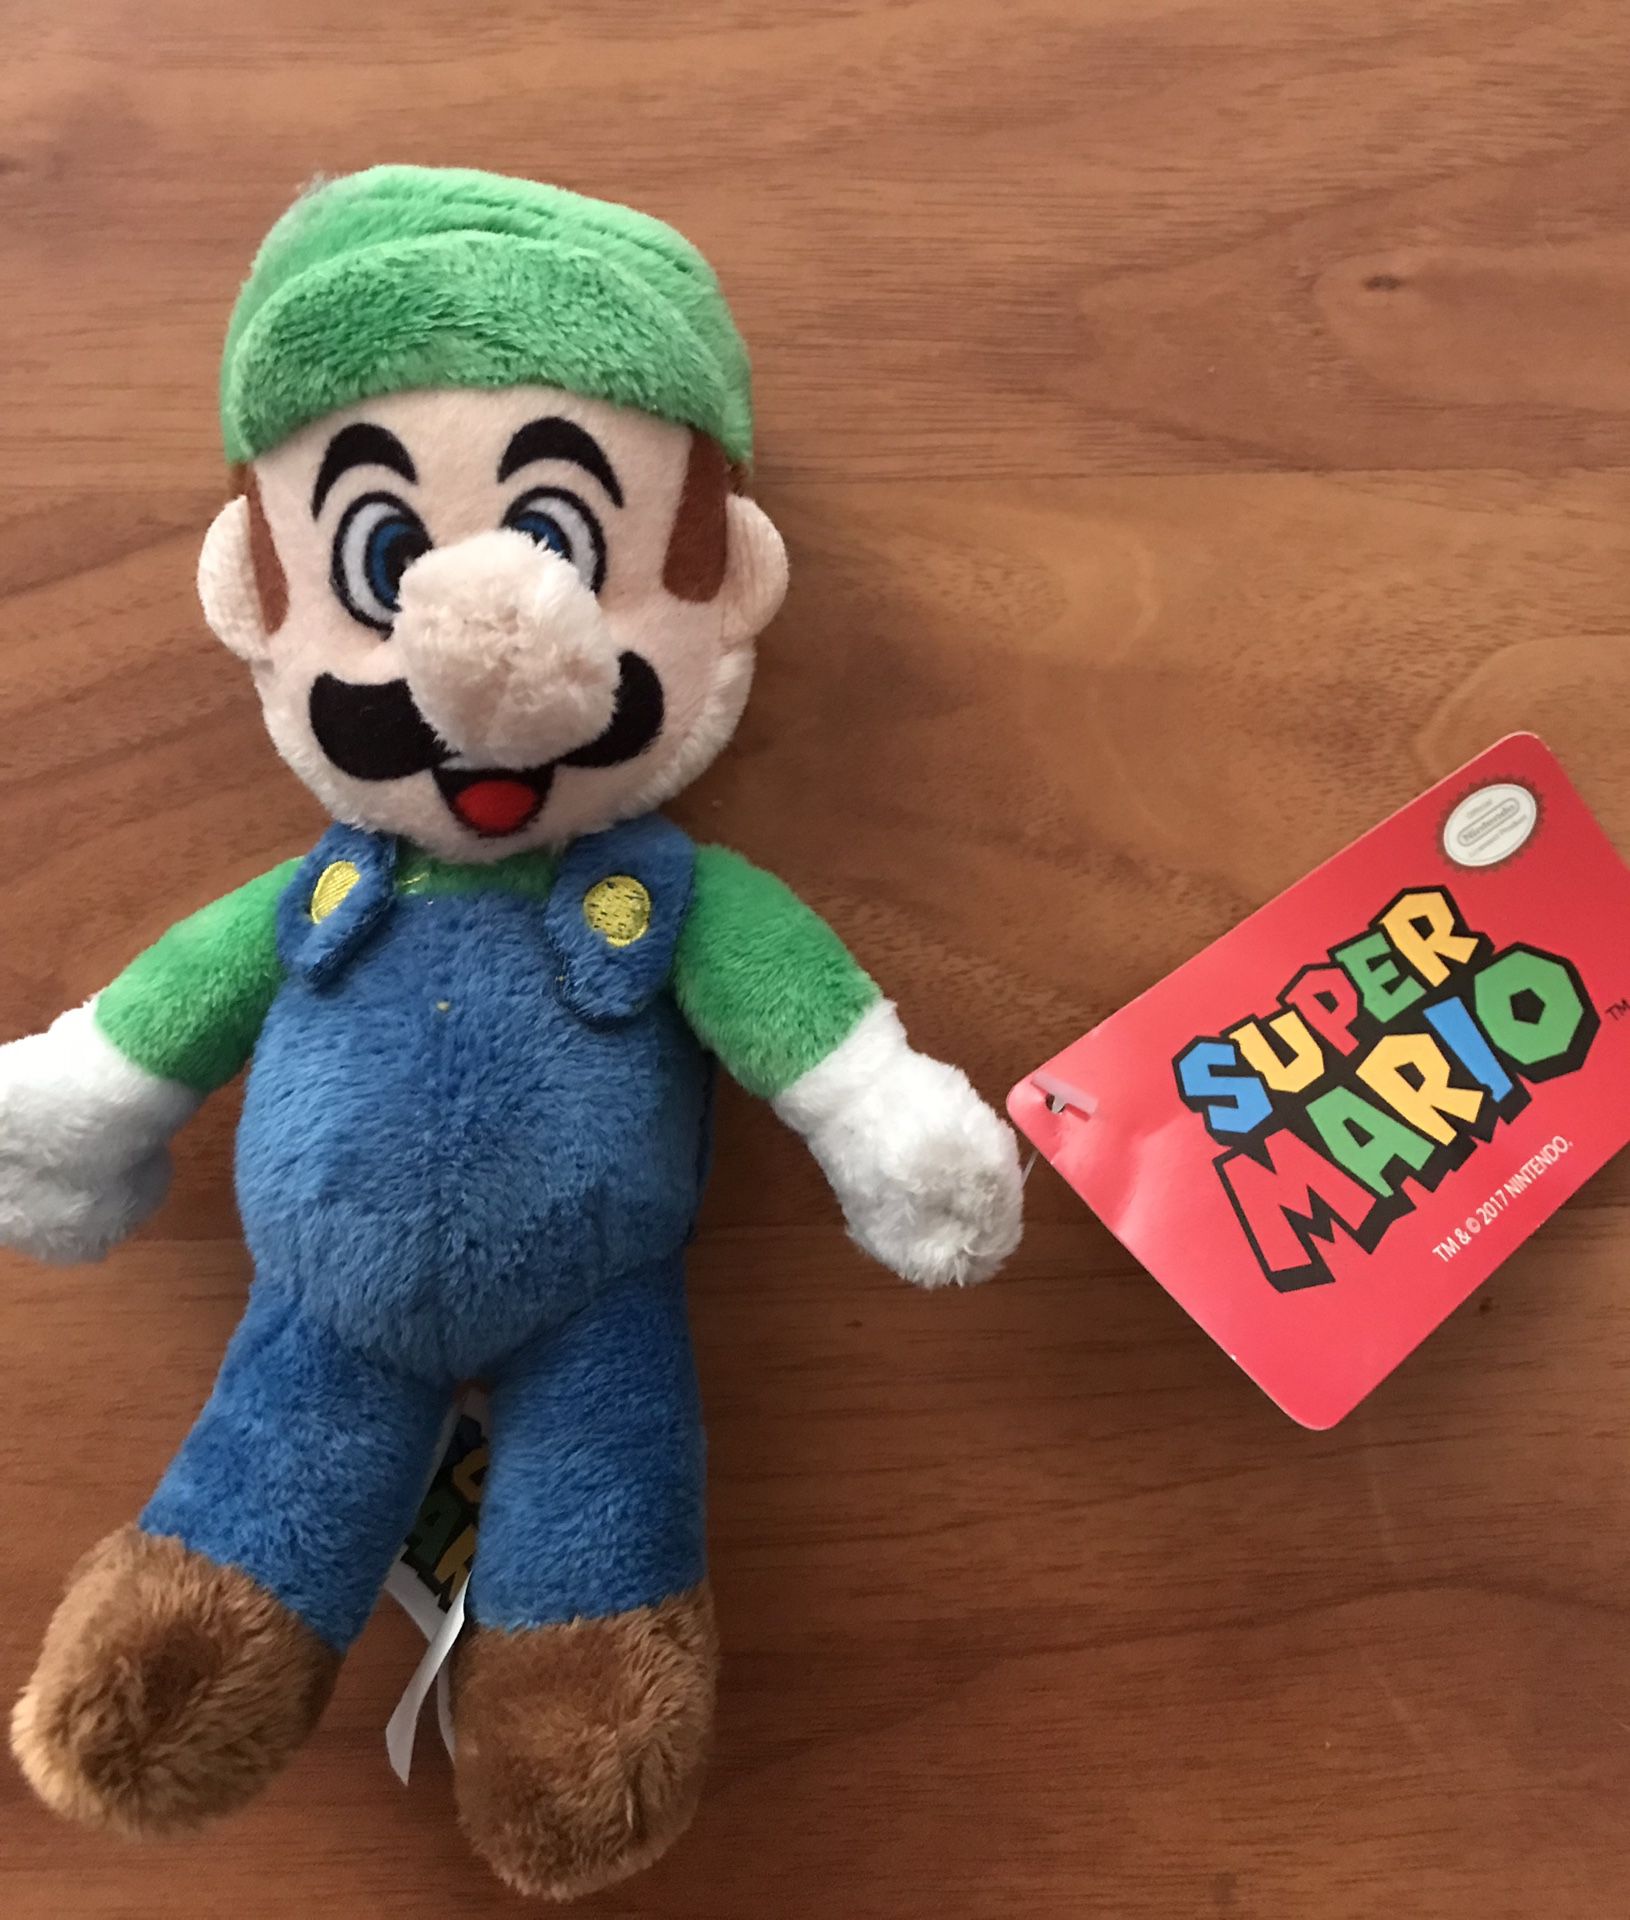 *BRAND NEW w/Tags* Super Mario Plushy $5